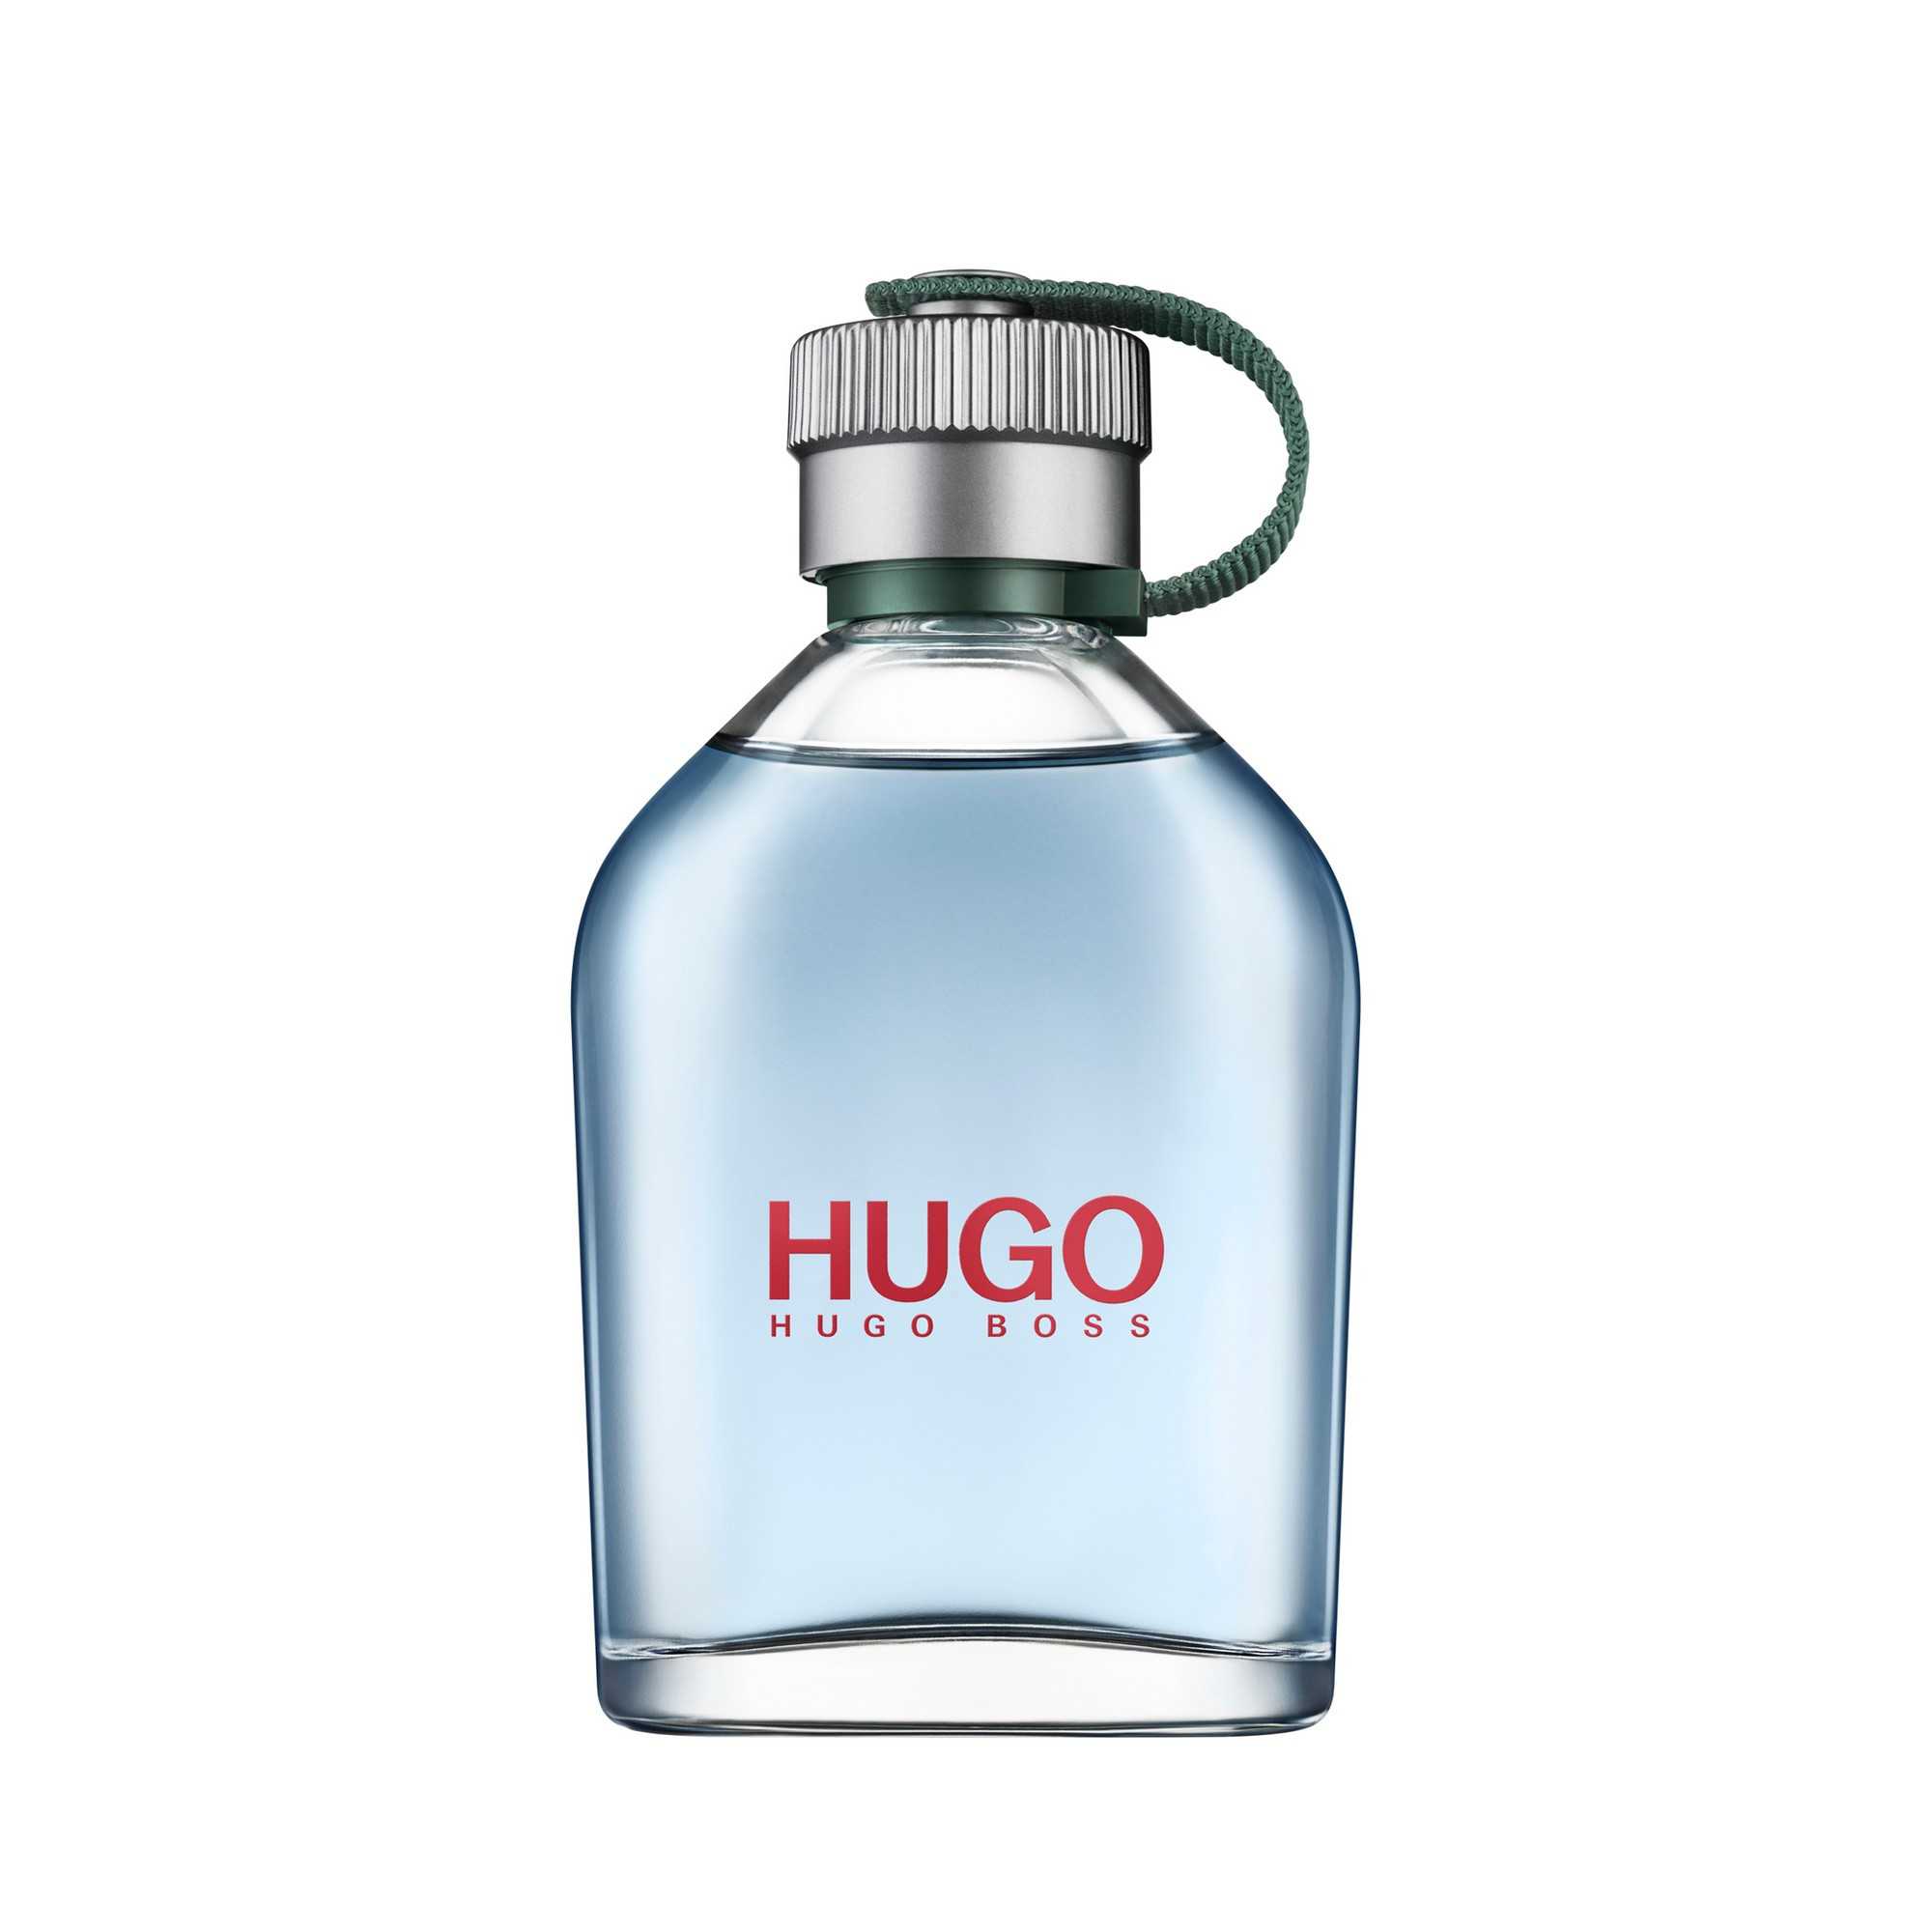 Hugo купить спб. Hugo Boss men 125ml EDT. Hugo Boss Hugo men 100 мл. Hugo Boss man 125 ml. Hugo Boss Hugo man 200ml.